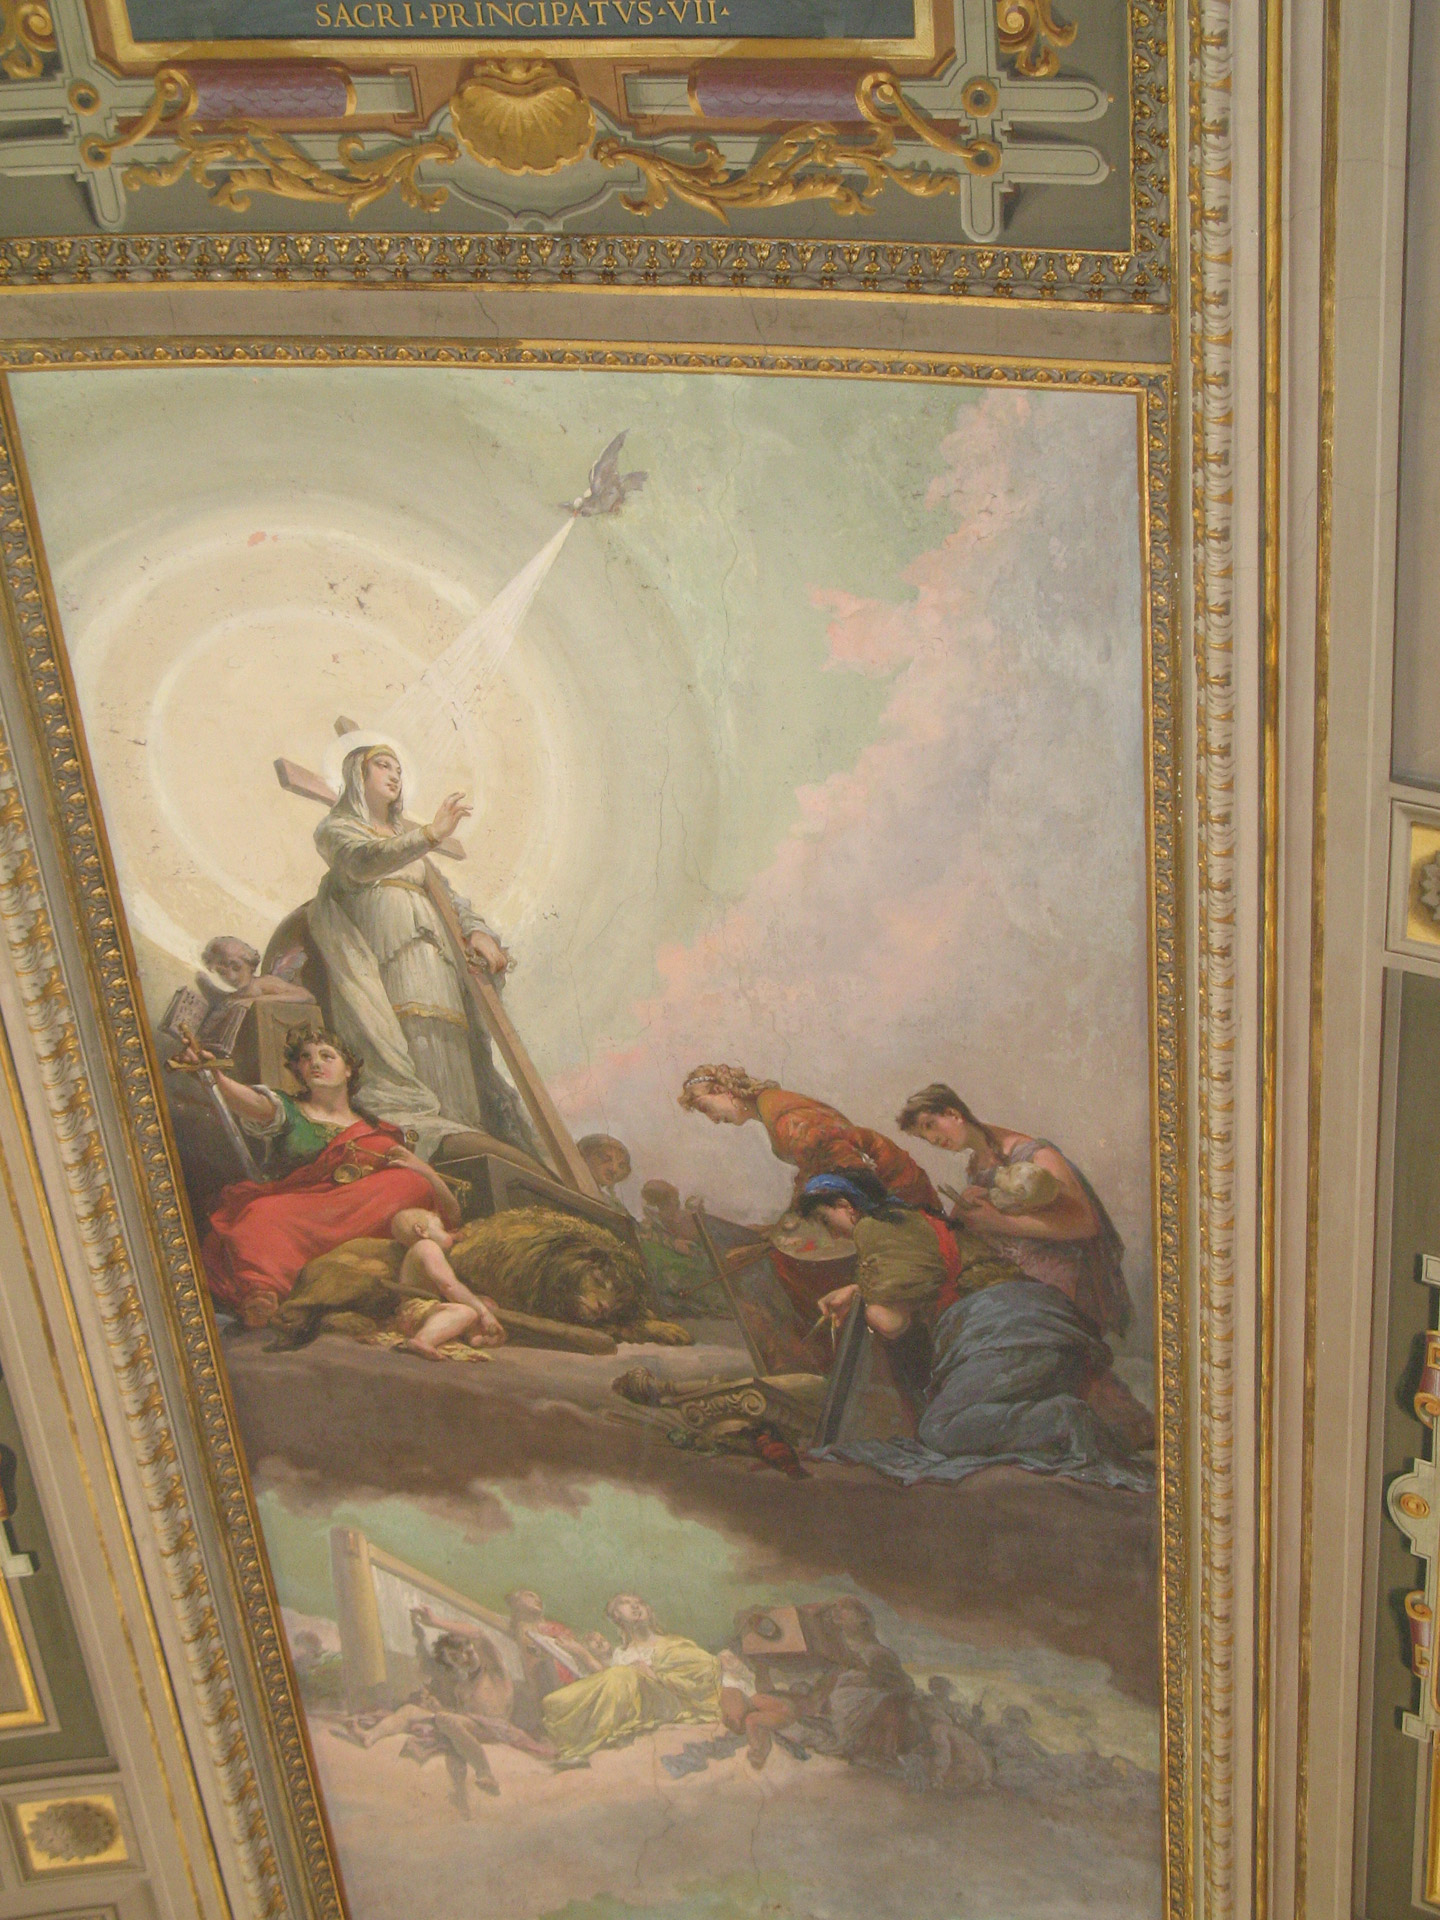 Vatican Ceiling Paintings Vatican Ceiling Paintings Free Pictures